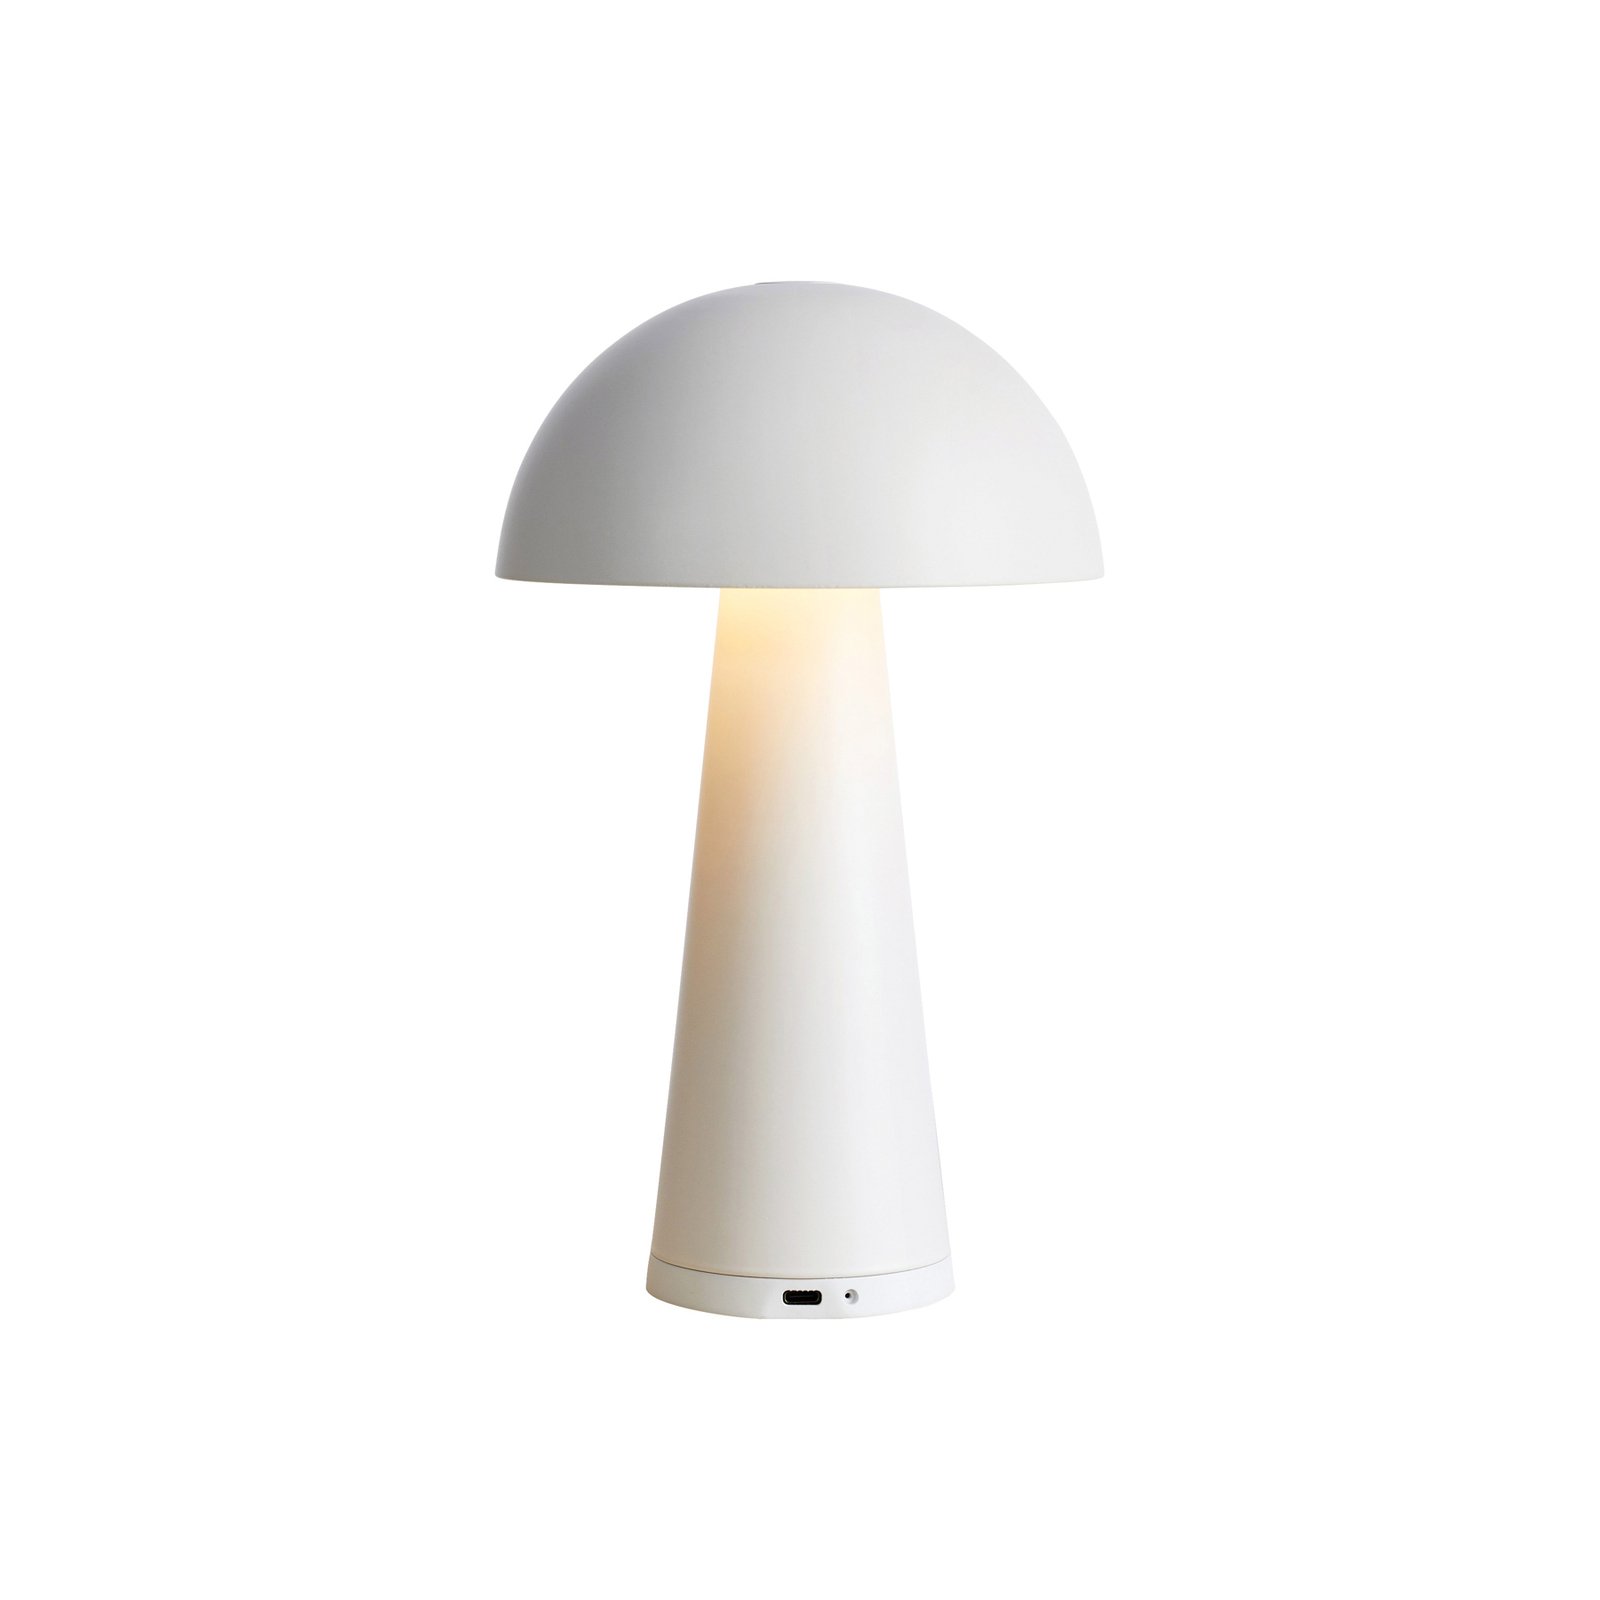 Accu-tafellamp Fungi voor buiten, wit